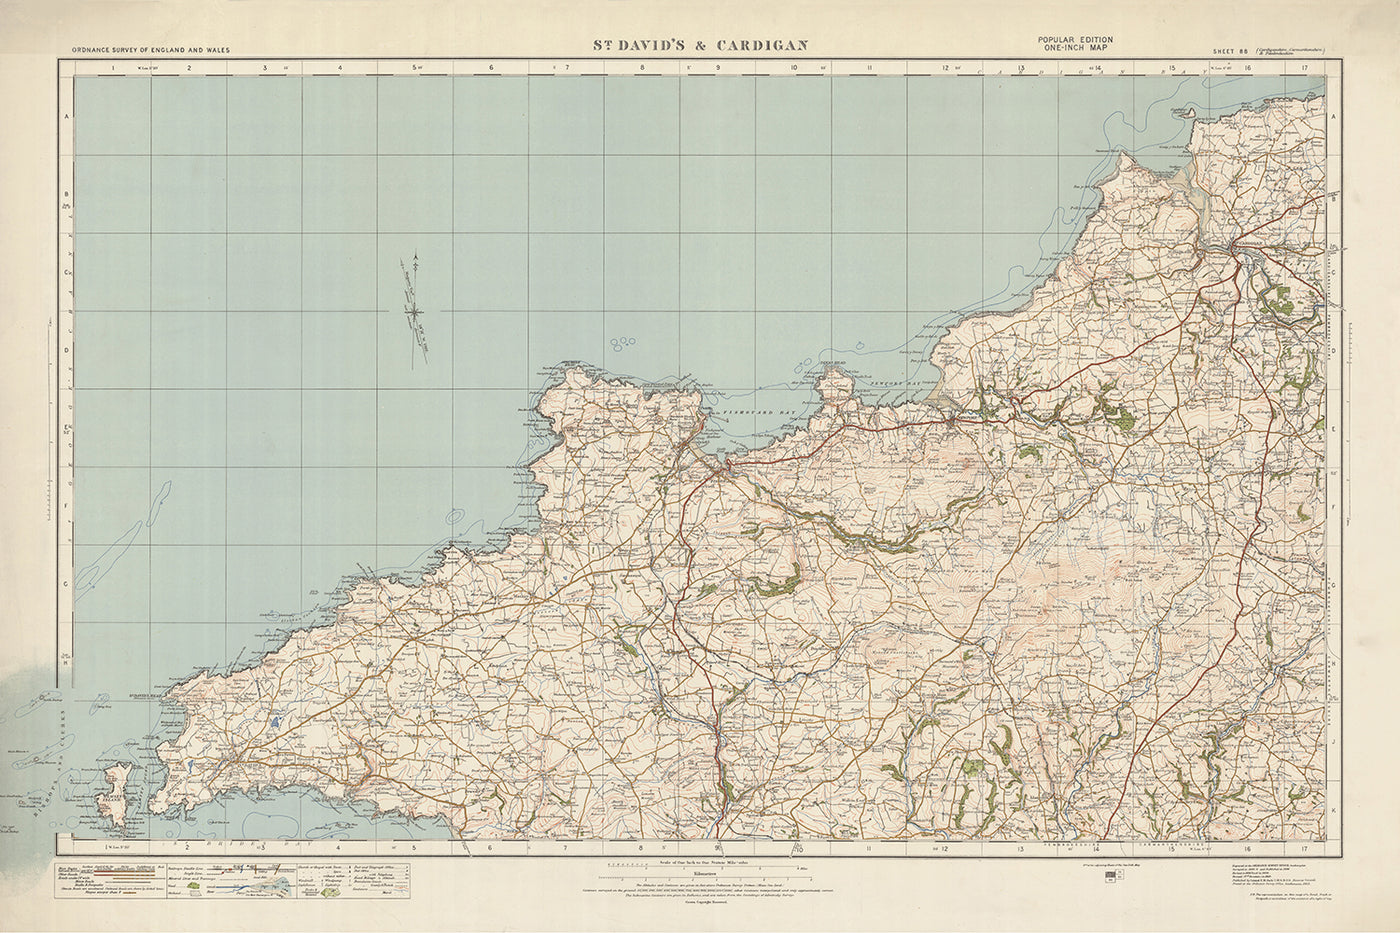 Old Ordnance Survey Map, Sheet 88 - St. Davids & Cardigan, 1925: Fishguard, Newport, Letterston, Ramsey Island, and Pembrokeshire Coast National Park